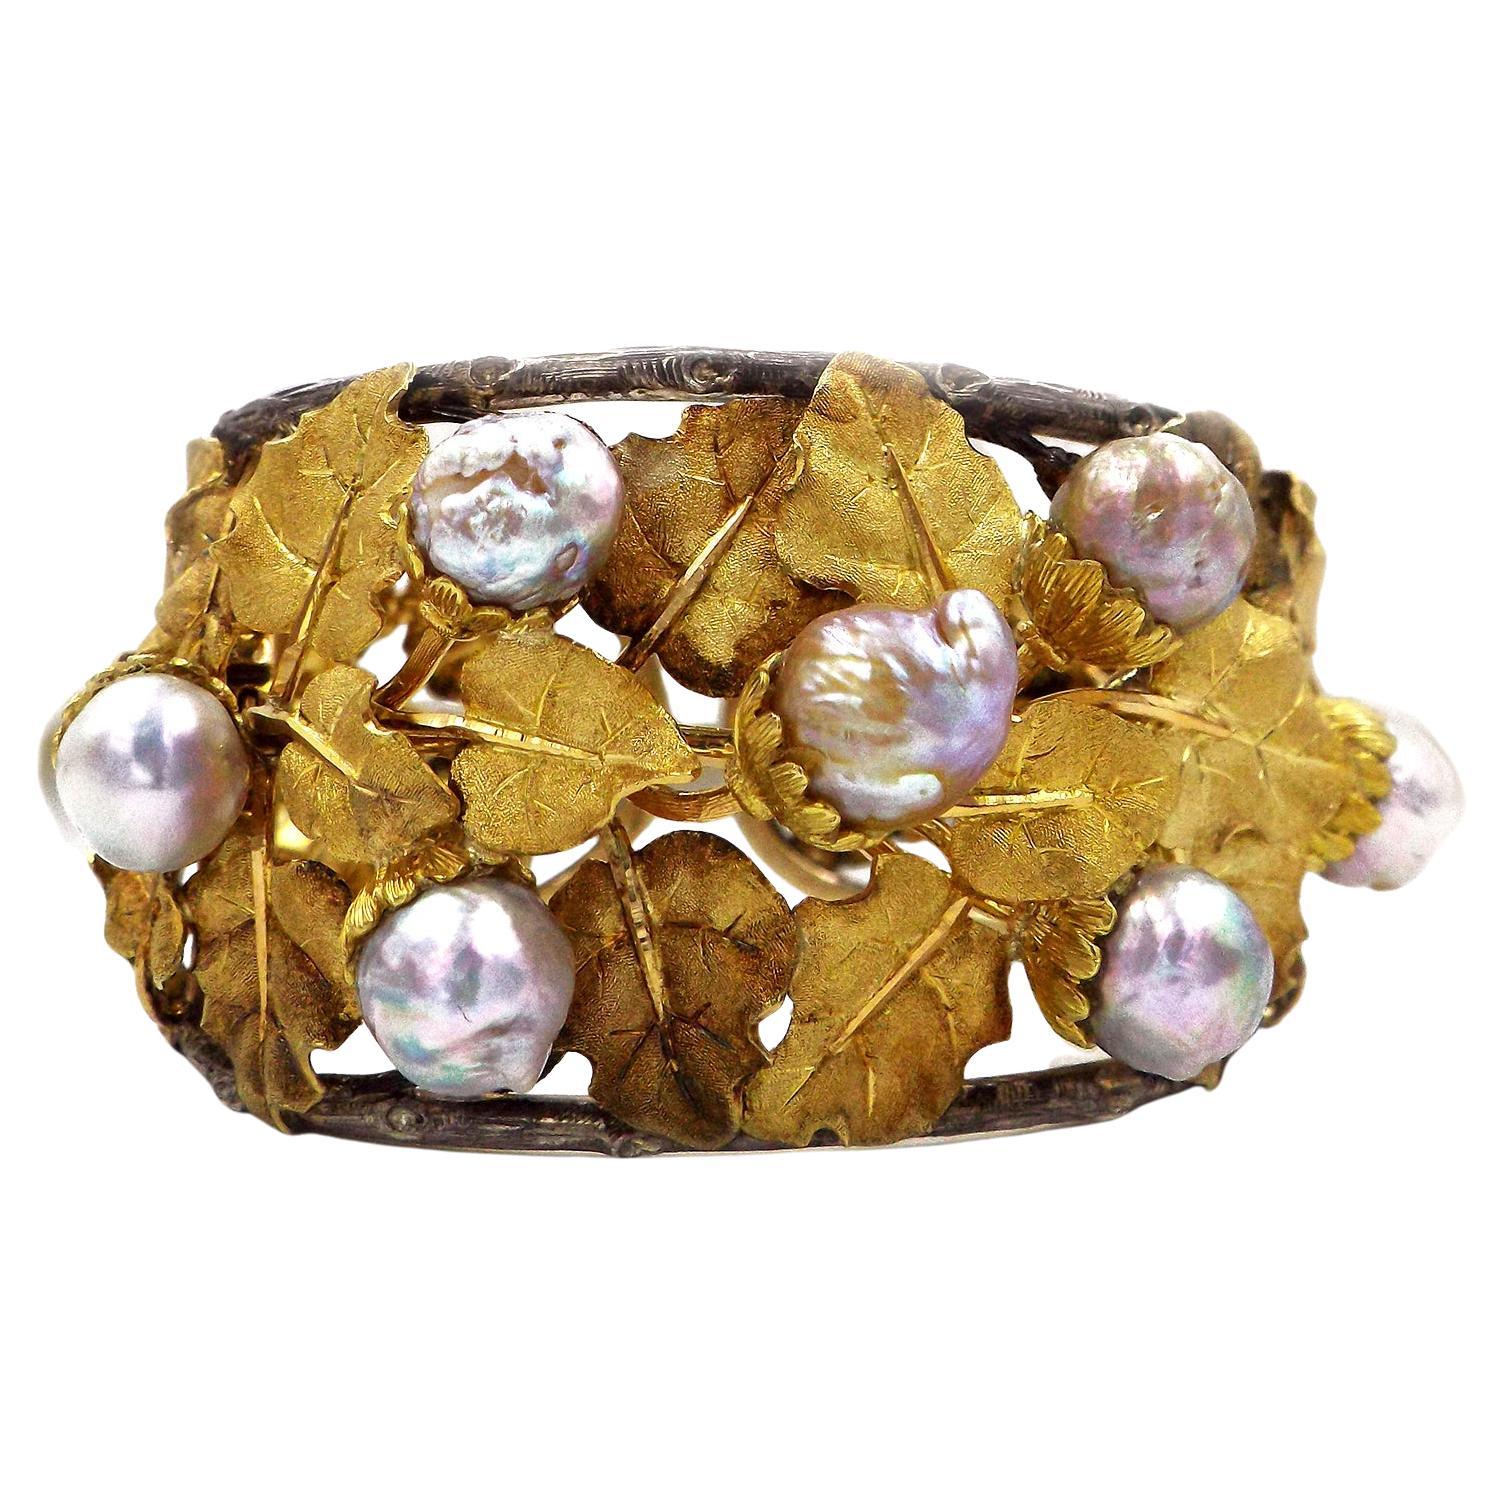 Buccellati 18K White Yellow Gold Cultured Pearl Grape Bracelet 6.5"